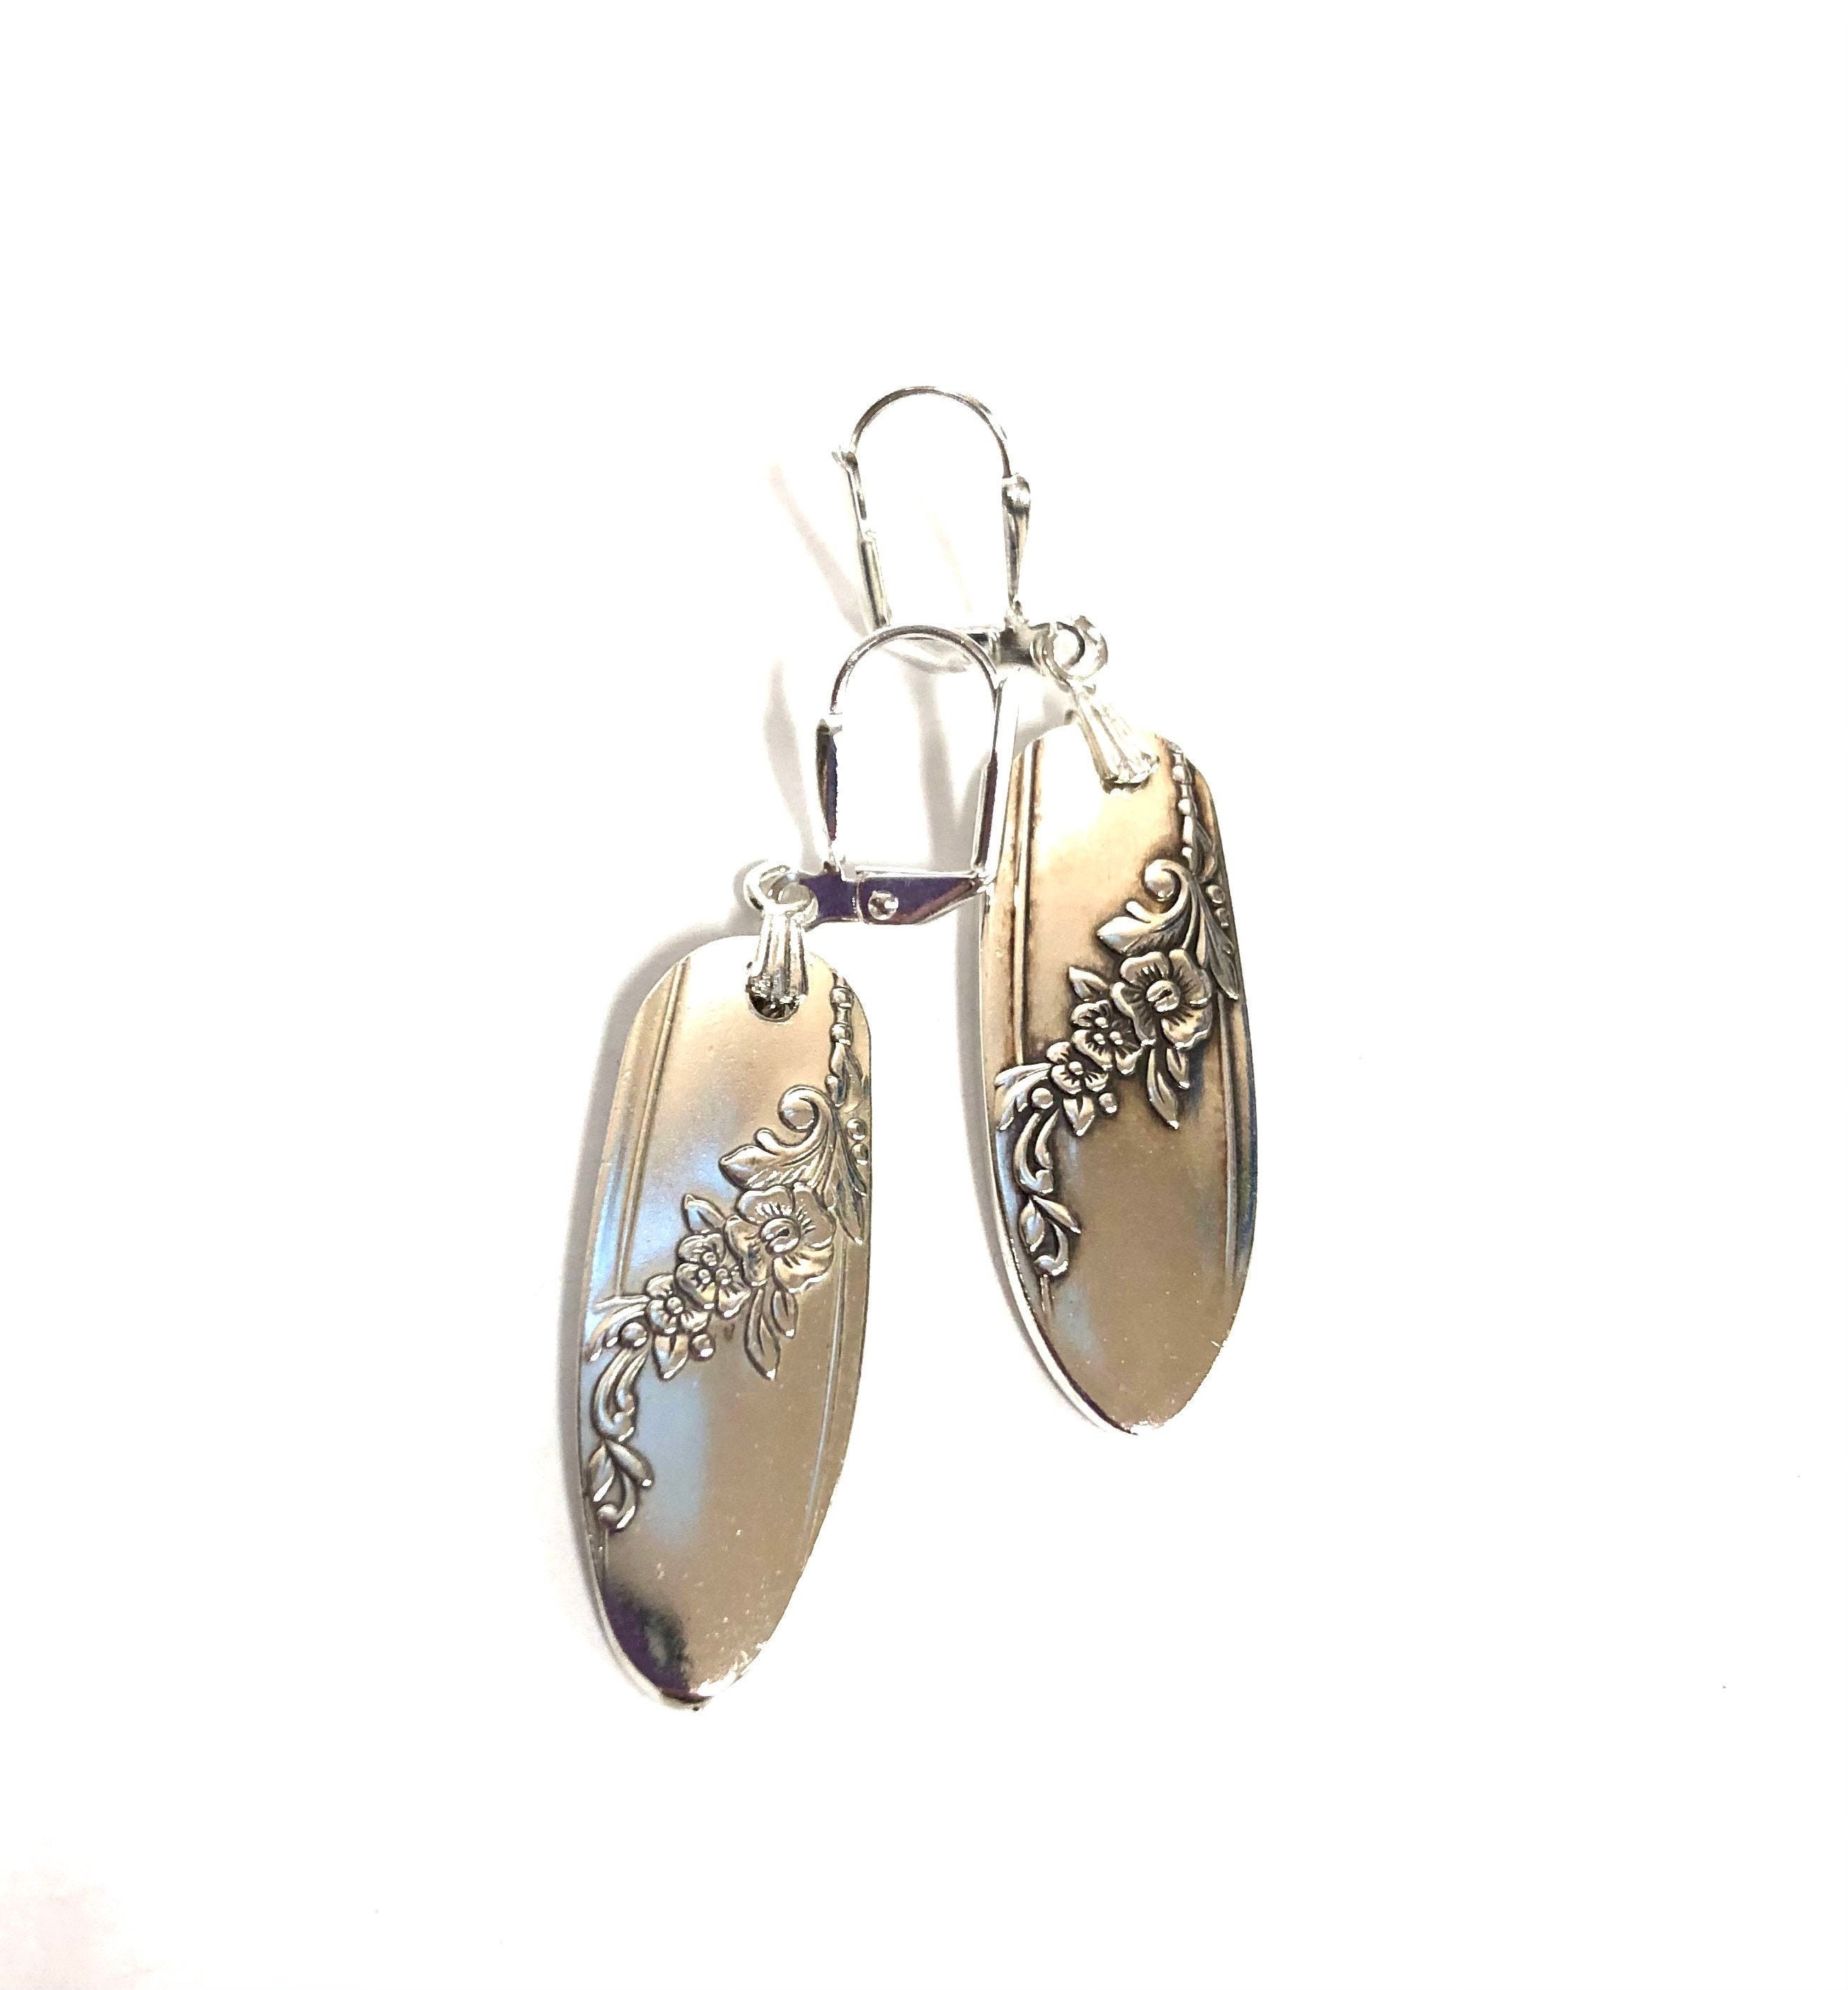 Details about   Vtg SPOON Earrings Queen Bess Oneida Silverware silver dangle or stud birthstone 